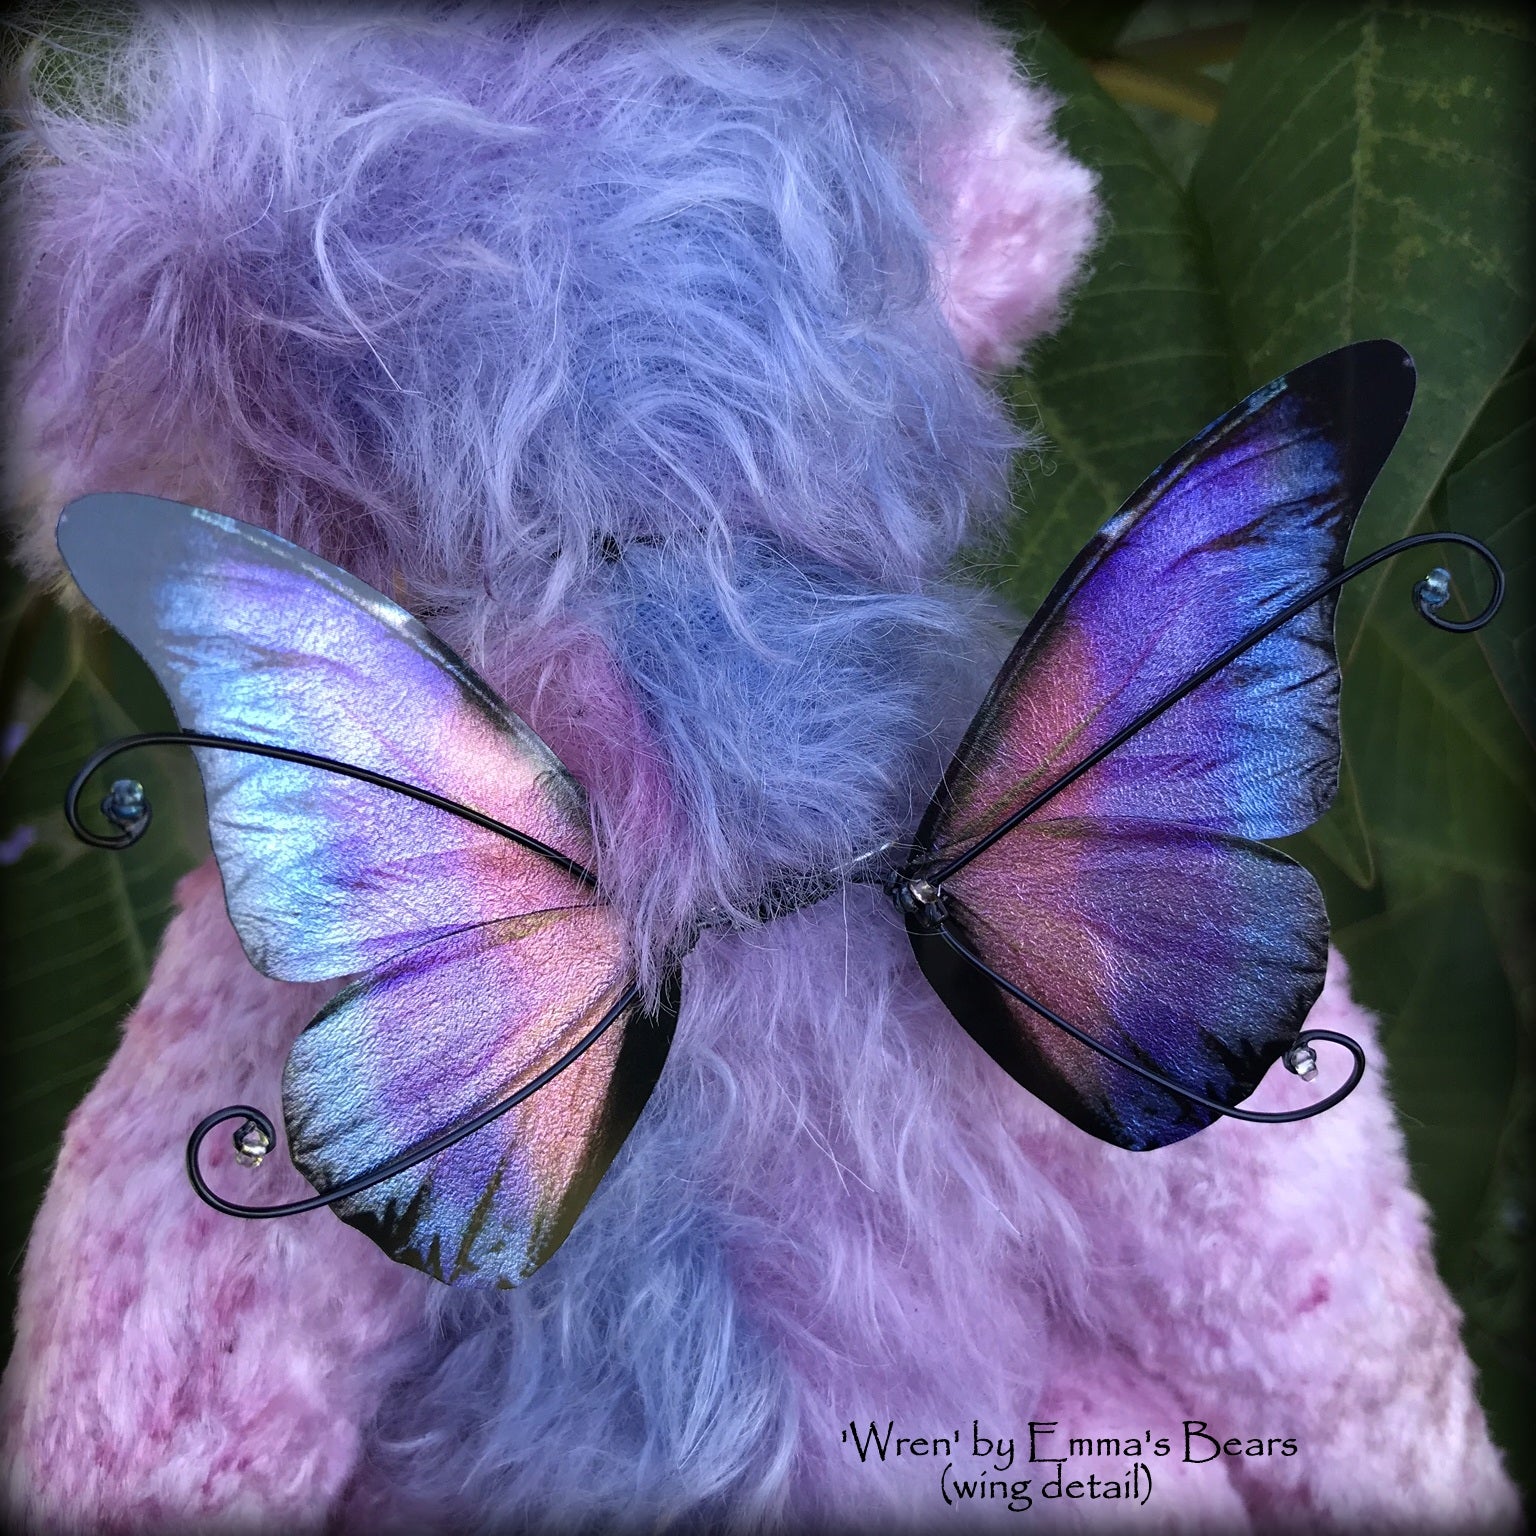 Wren -10" Hand-dyed mohair and viscose artist fairy bear by Emma's Bears - OOAK